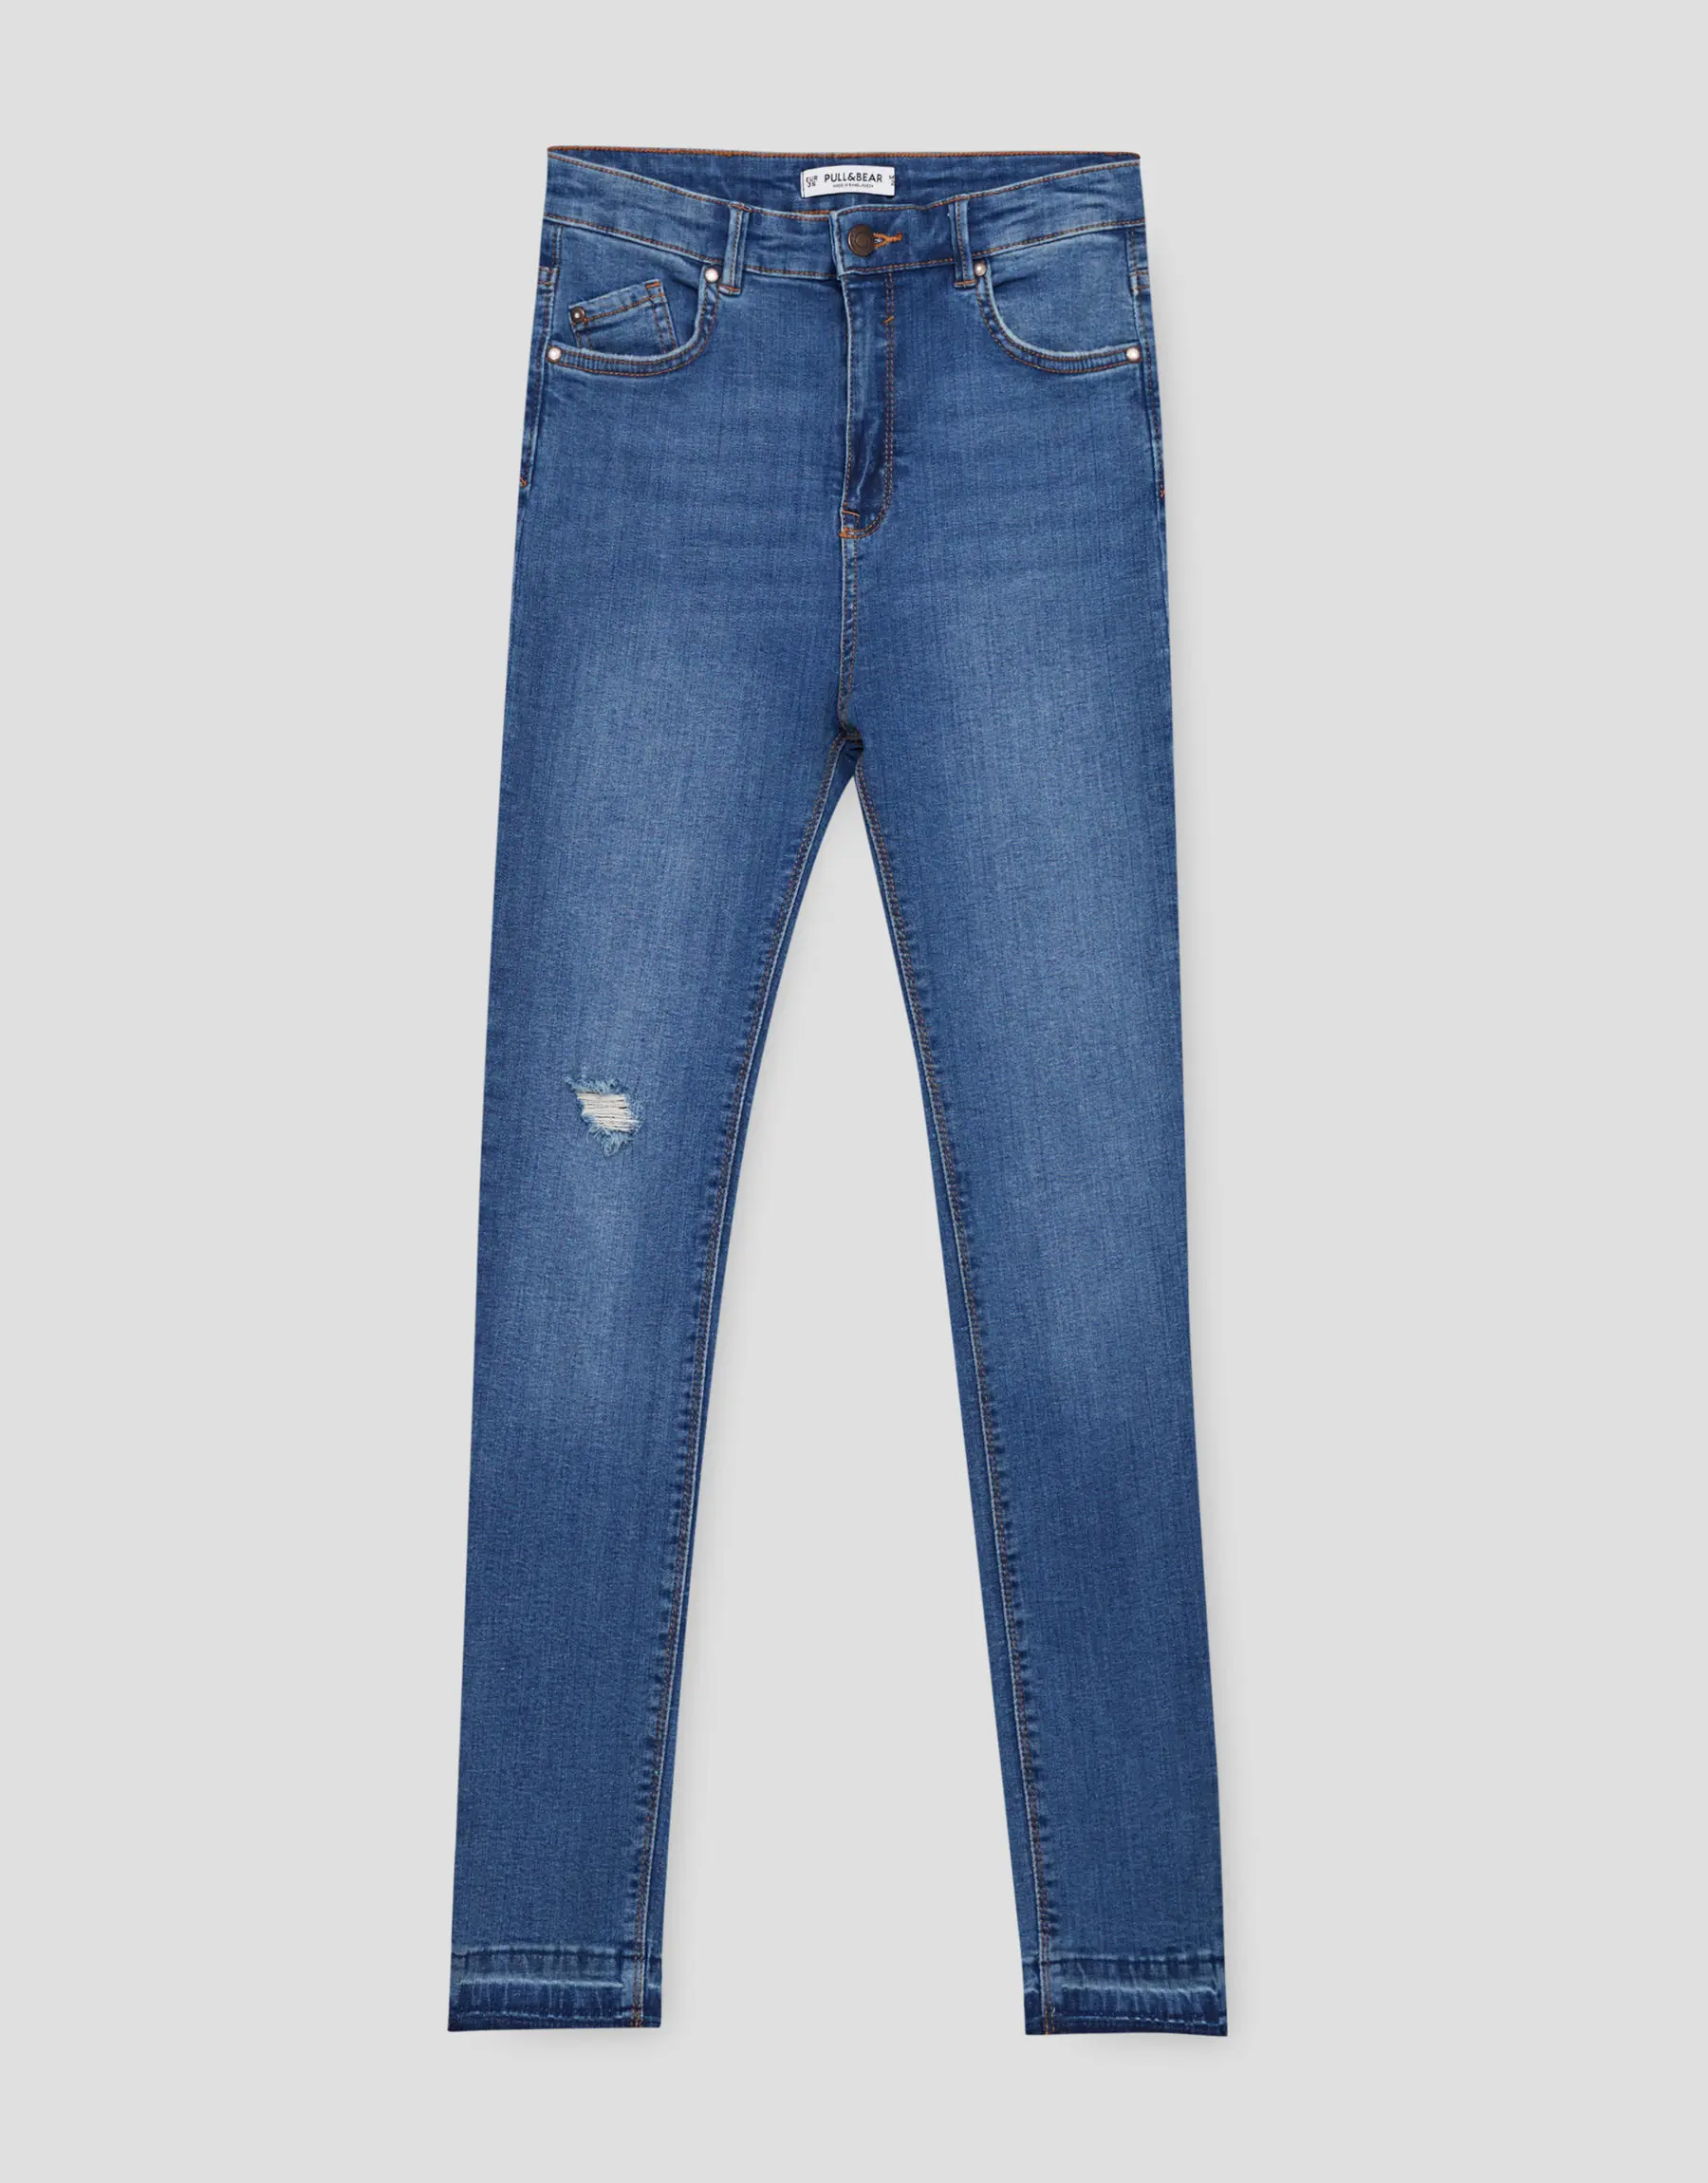 High waist skinny jeans. (pullandbear.com)